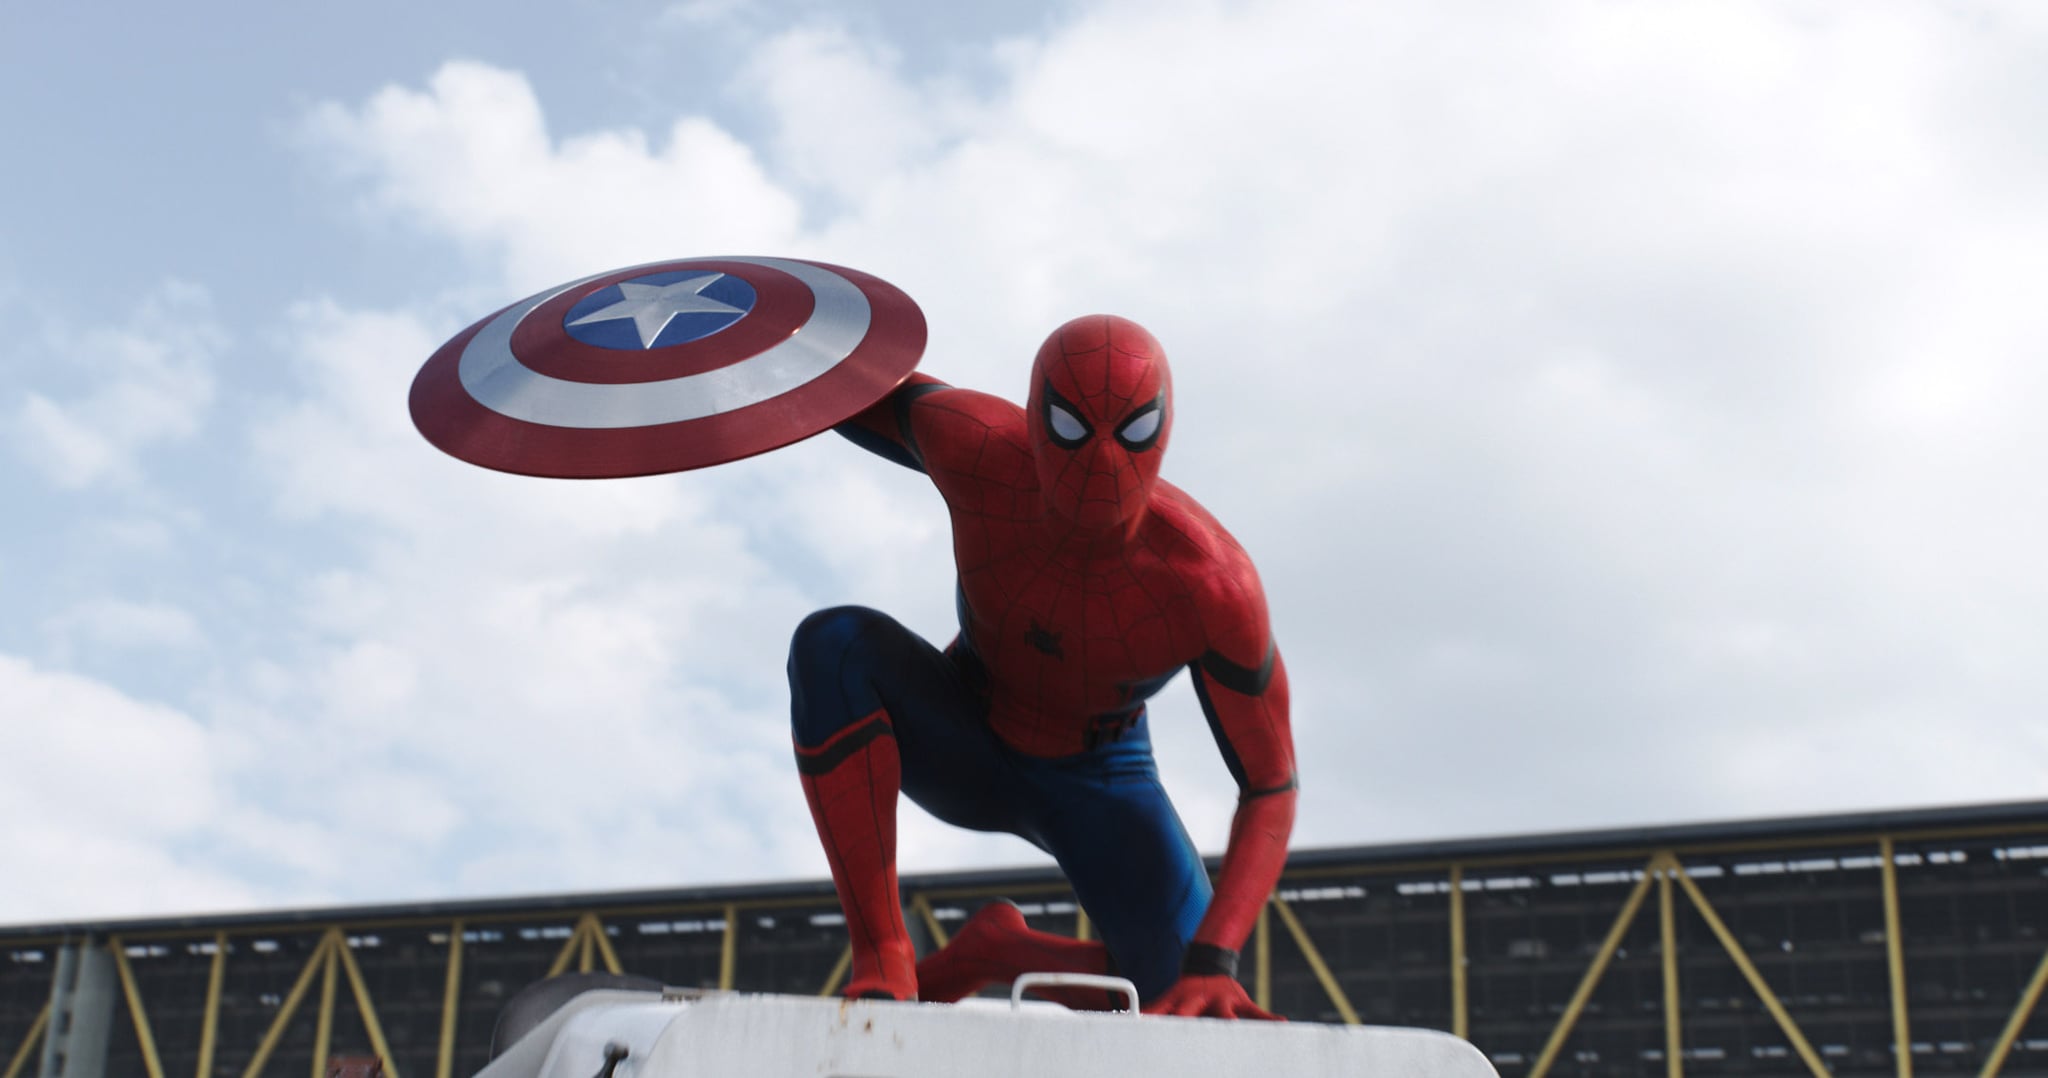 Captain America, Okoye, Nick Fury And Spider-Man In Avenders Wallpapers